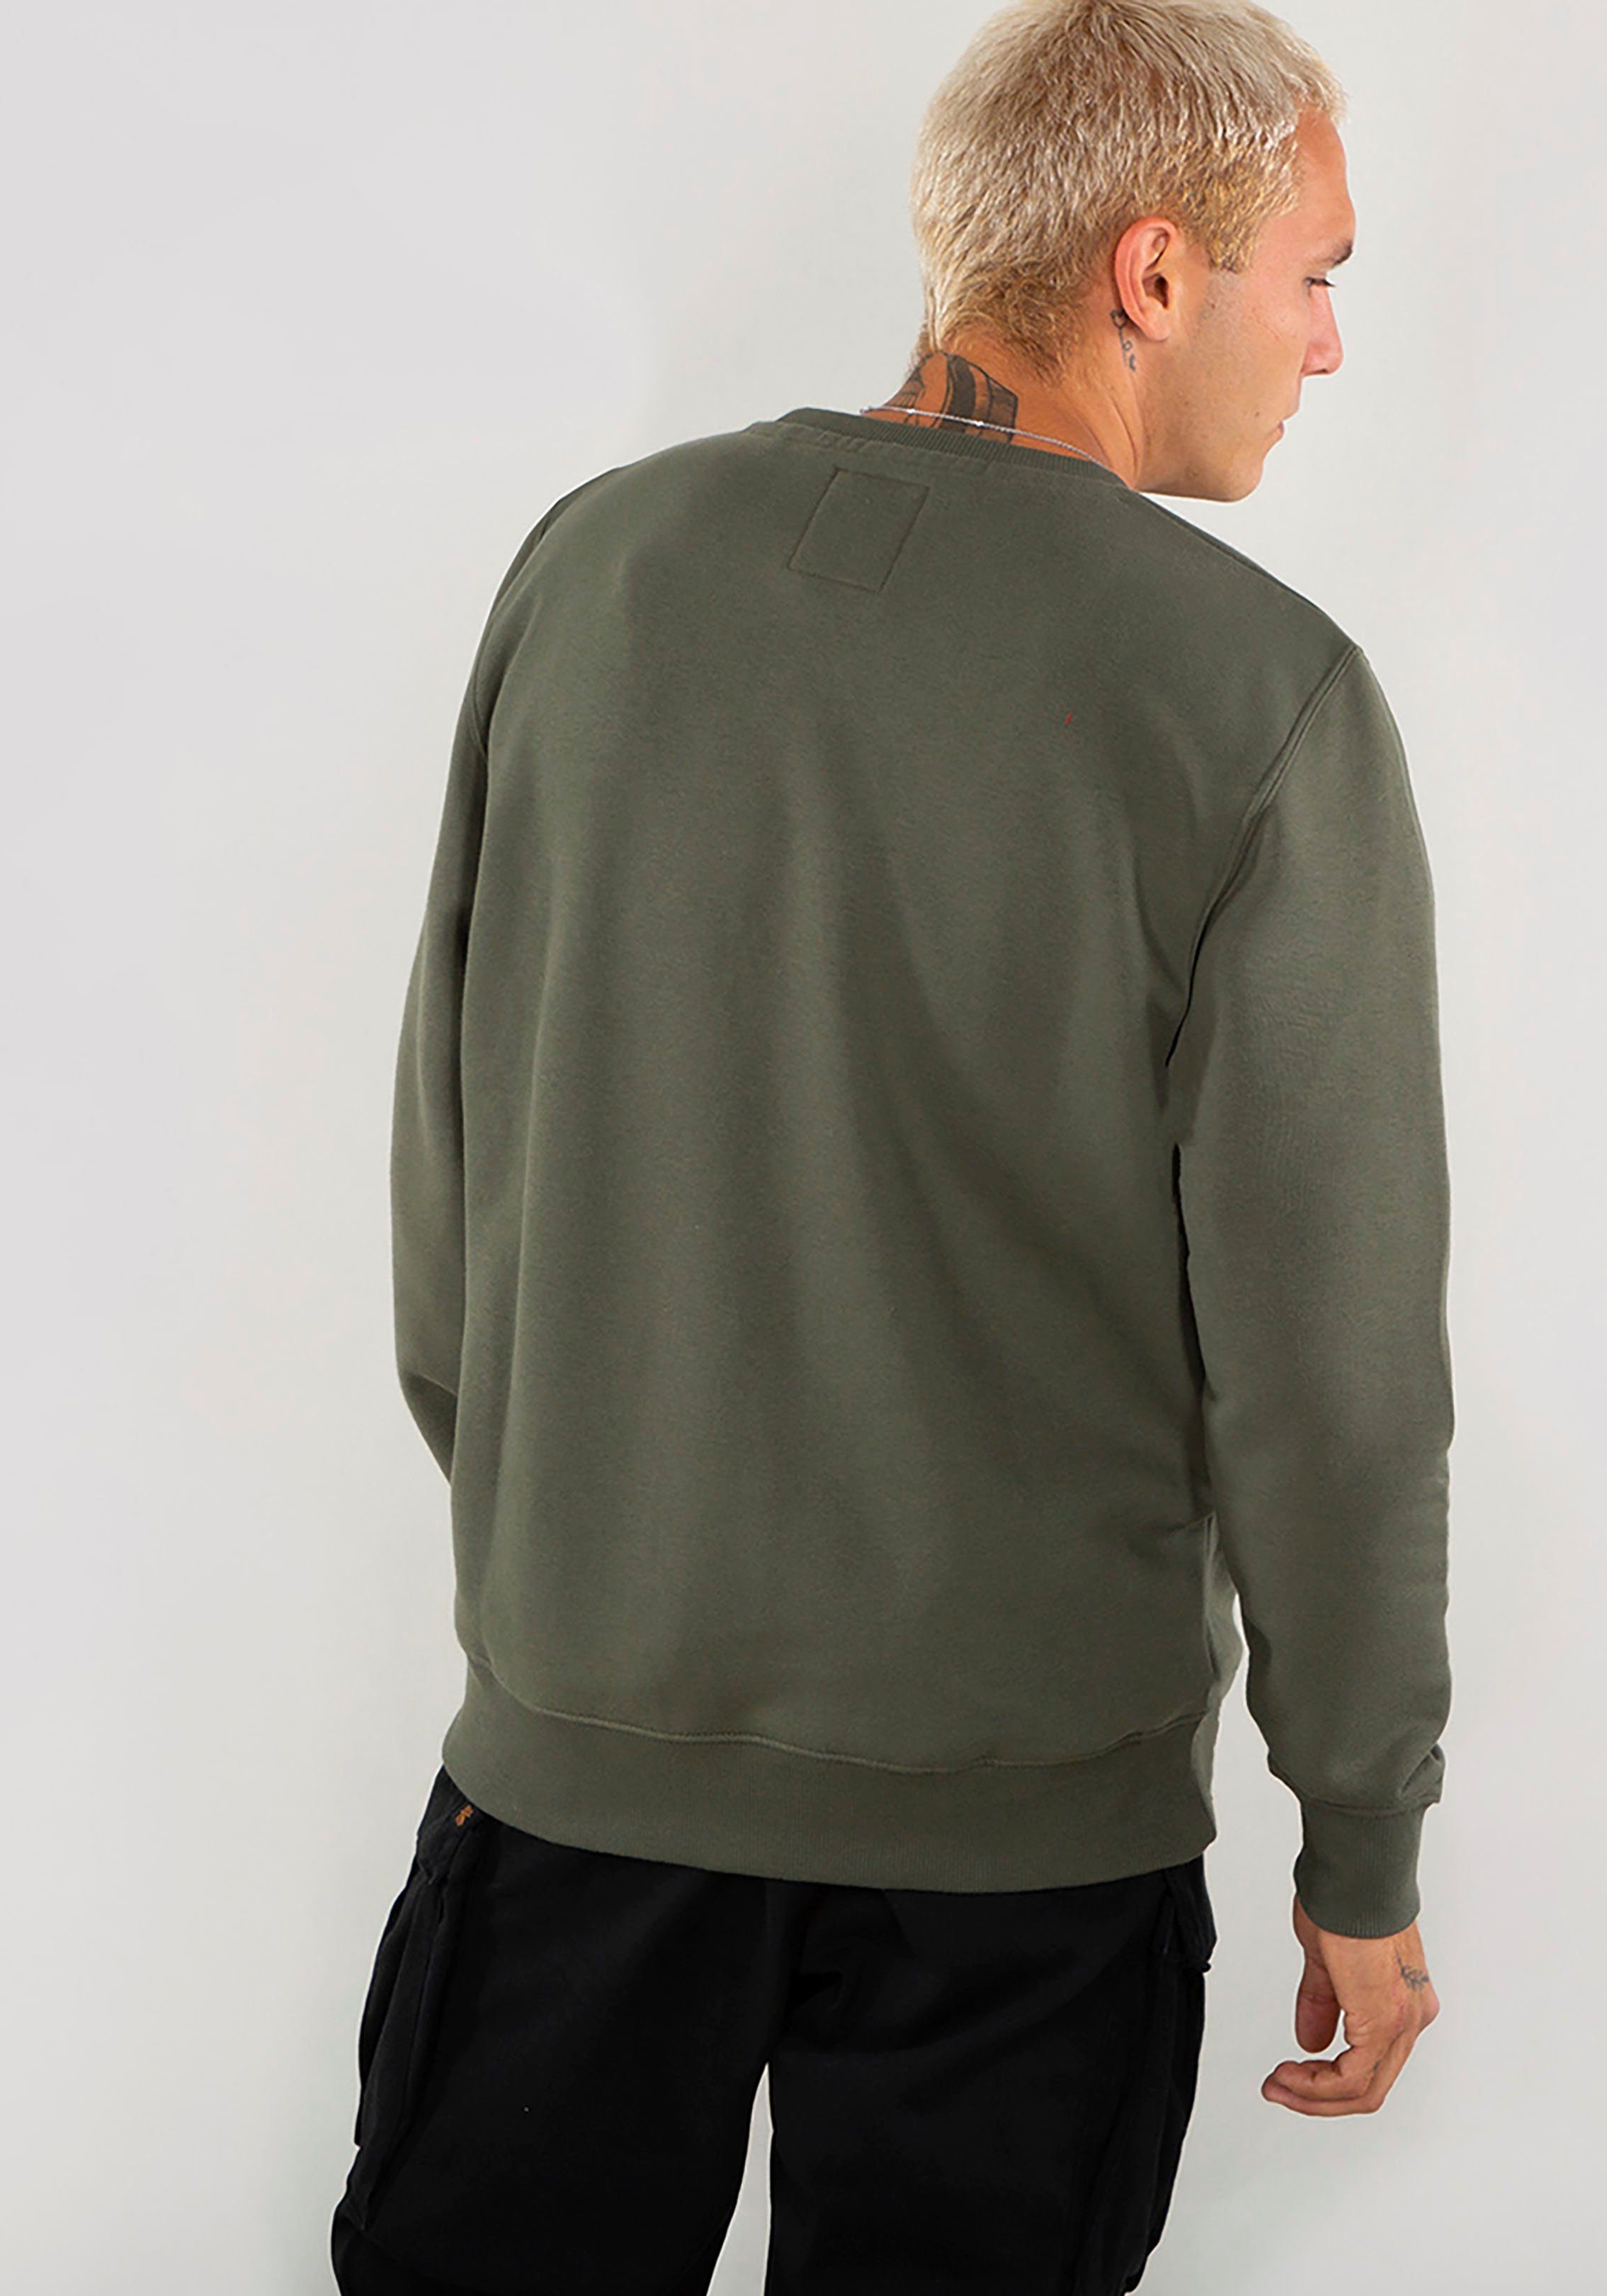 small Basic Sweatshirt Logo Sweater Alpha olive dark Industries